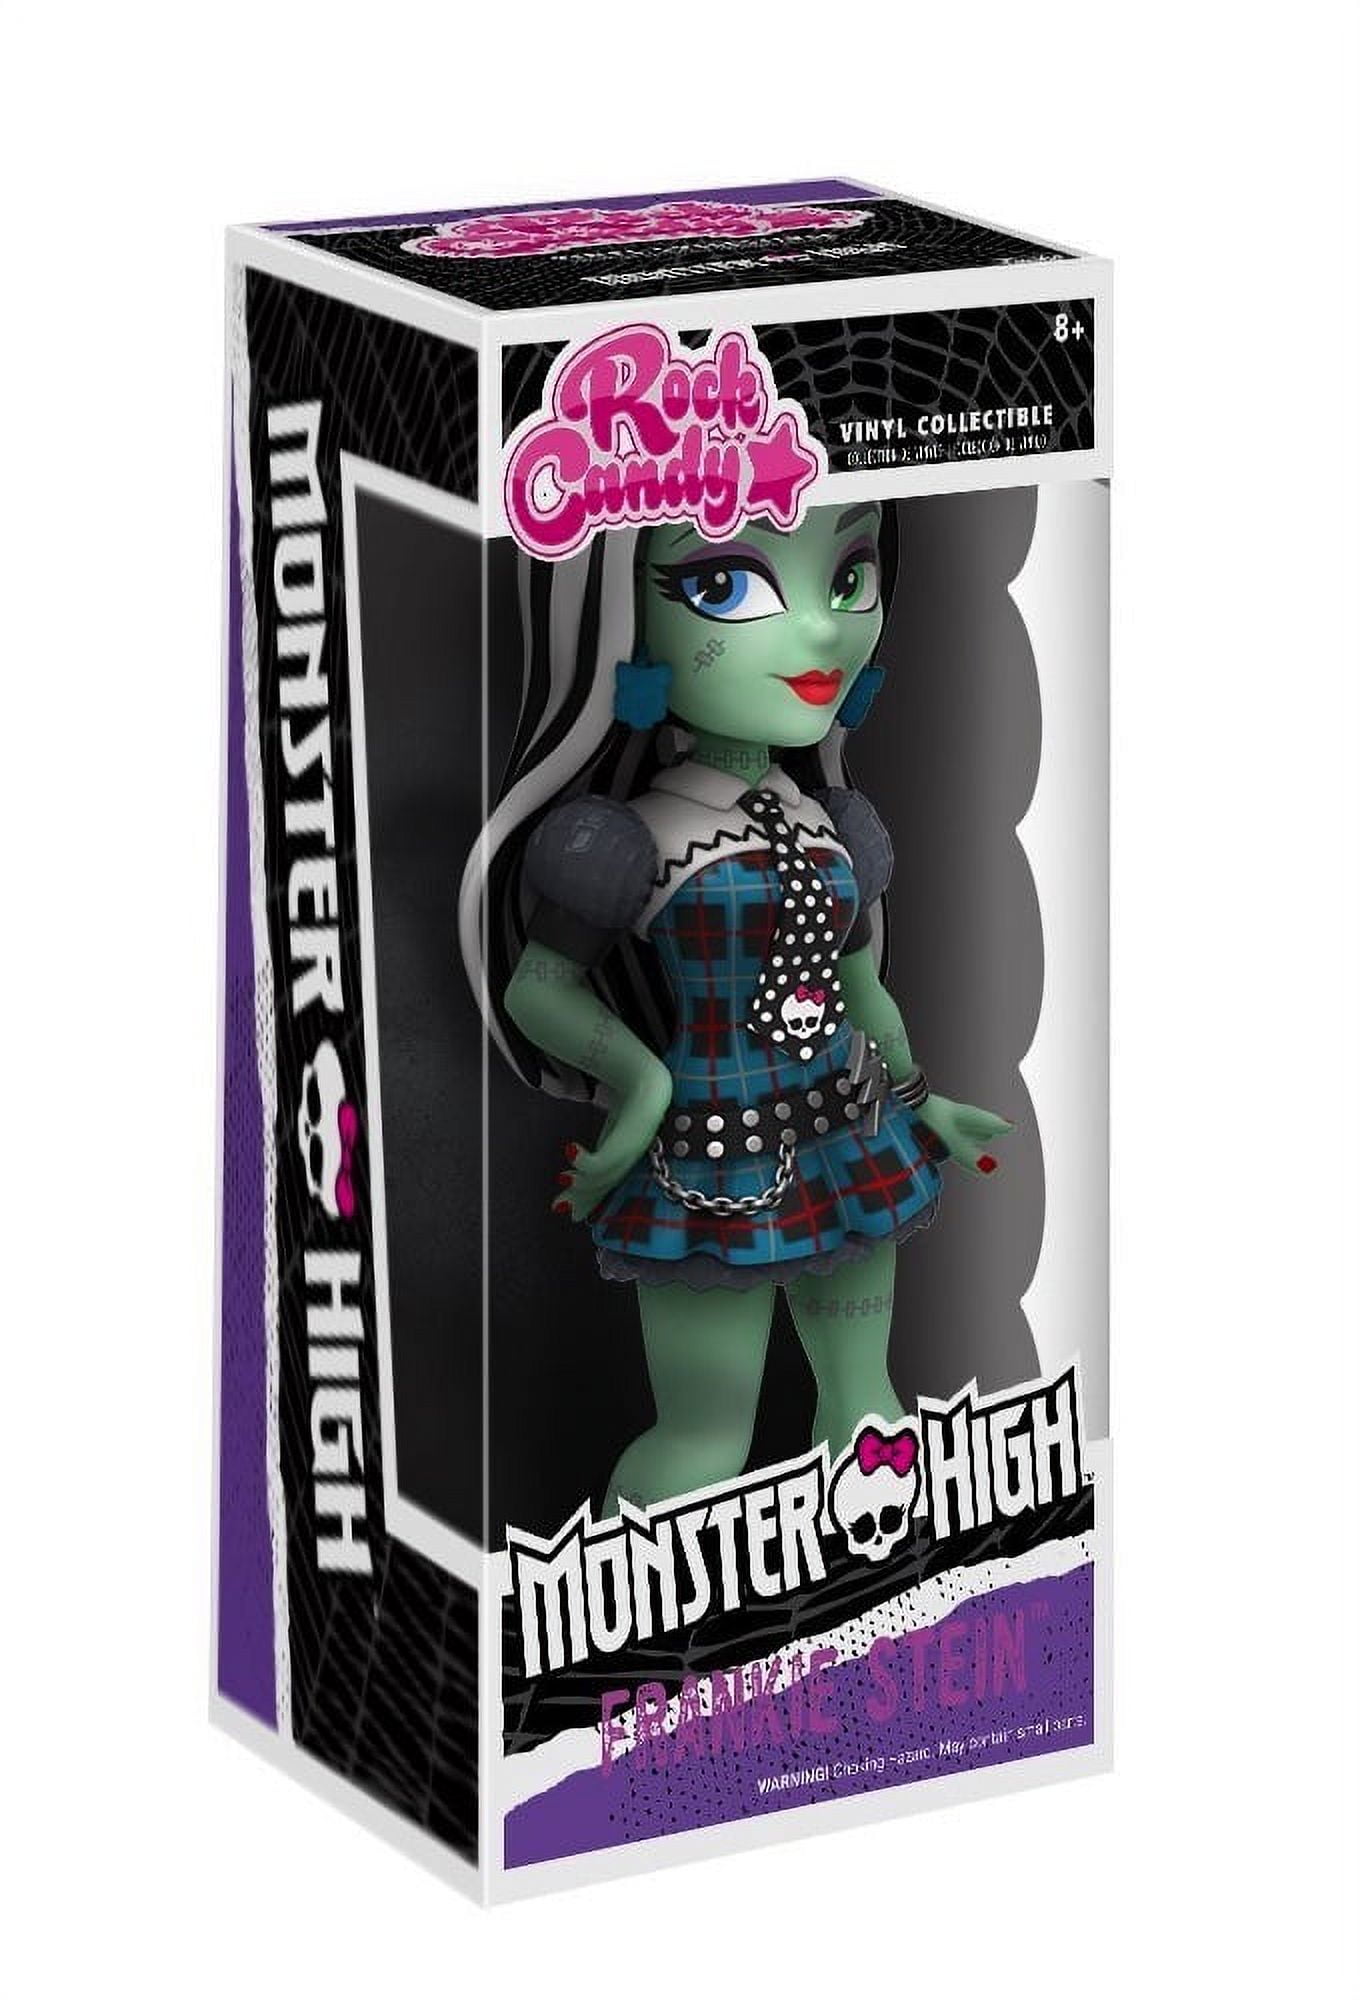 Monster High Dolls Funko Pop Vinyl Figures and Rock Candy Figures